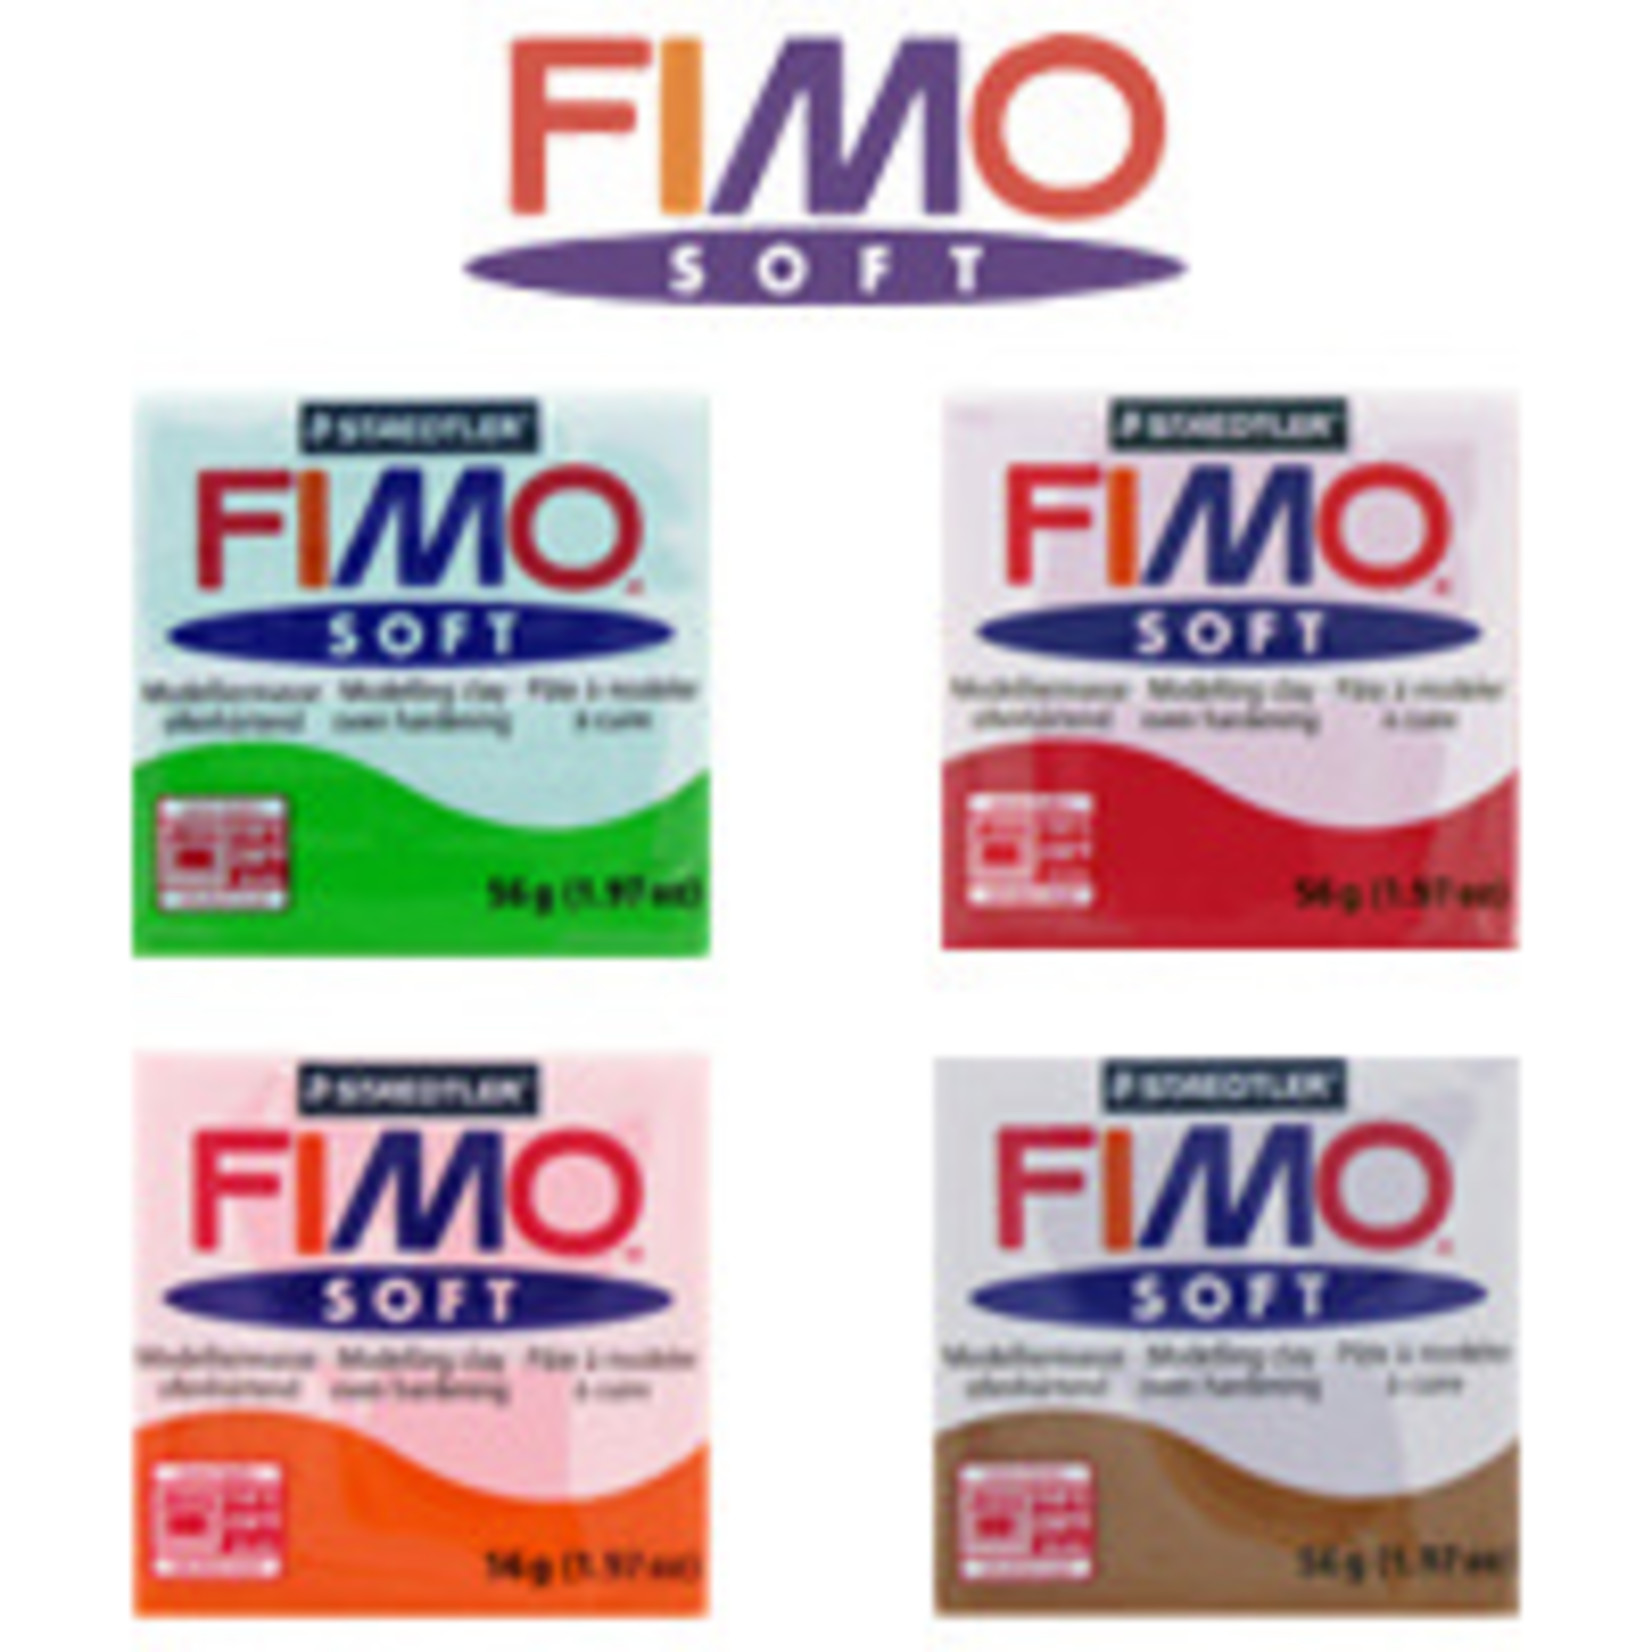 FIMO SOFT WHITE 3.75 LBS